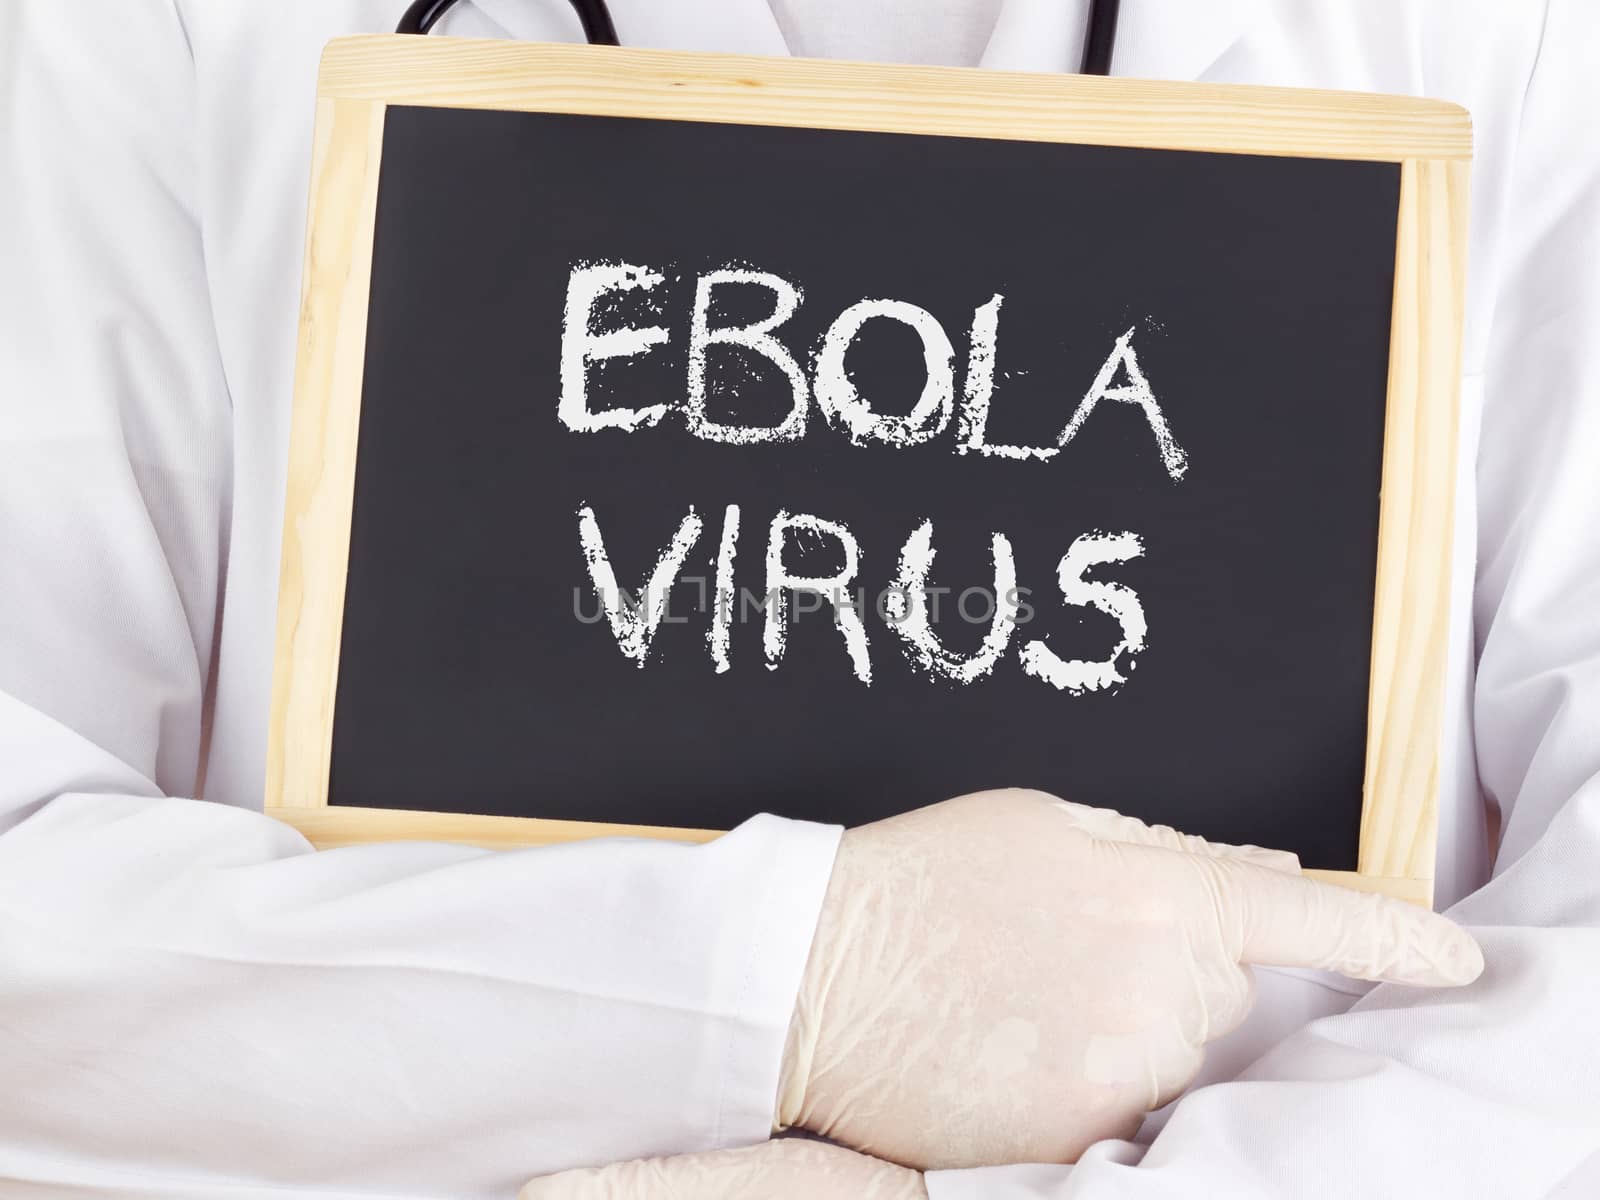 Doctor shows information: Ebolavirus